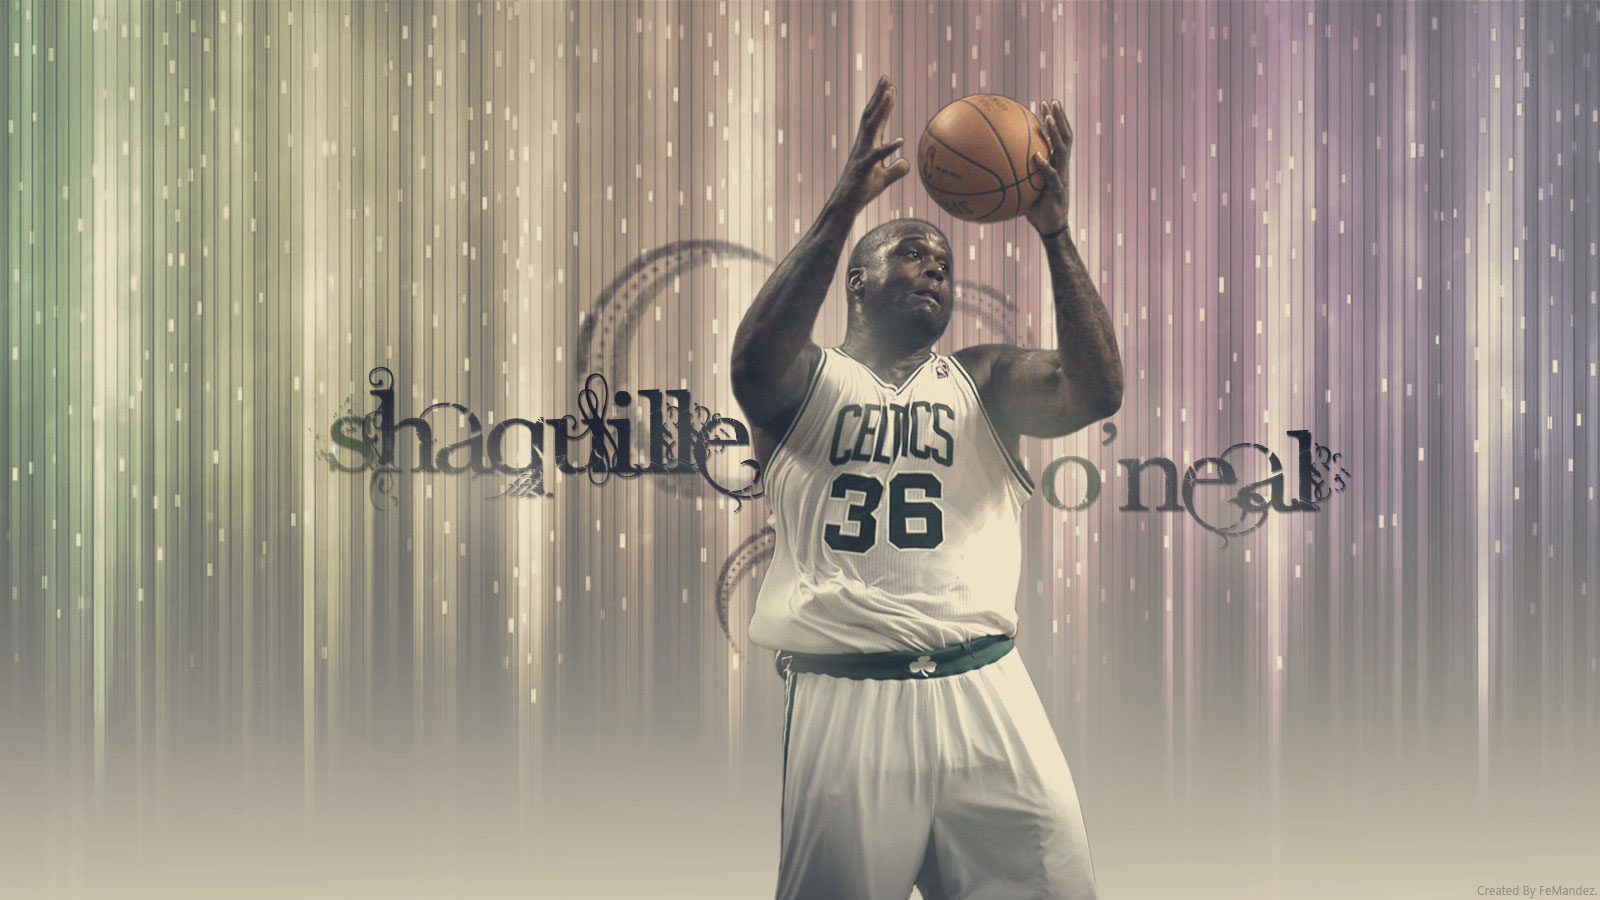 Shaquille O’Neal Celtics 2011 Widescreen Wallpaper | Basketball Wallpapers at ...